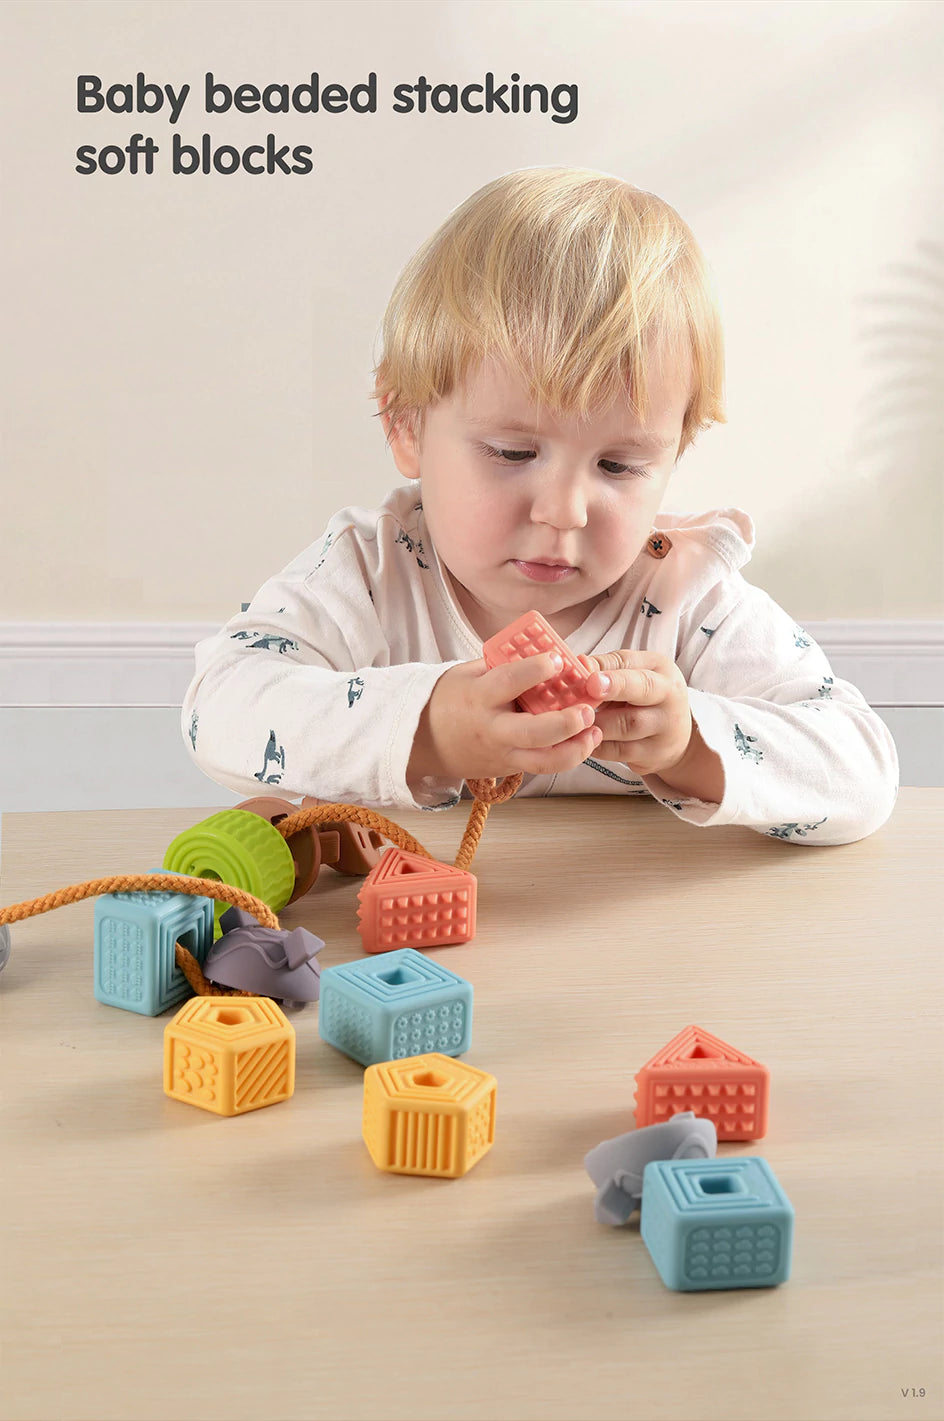 Soft building blocks for sensory play in children